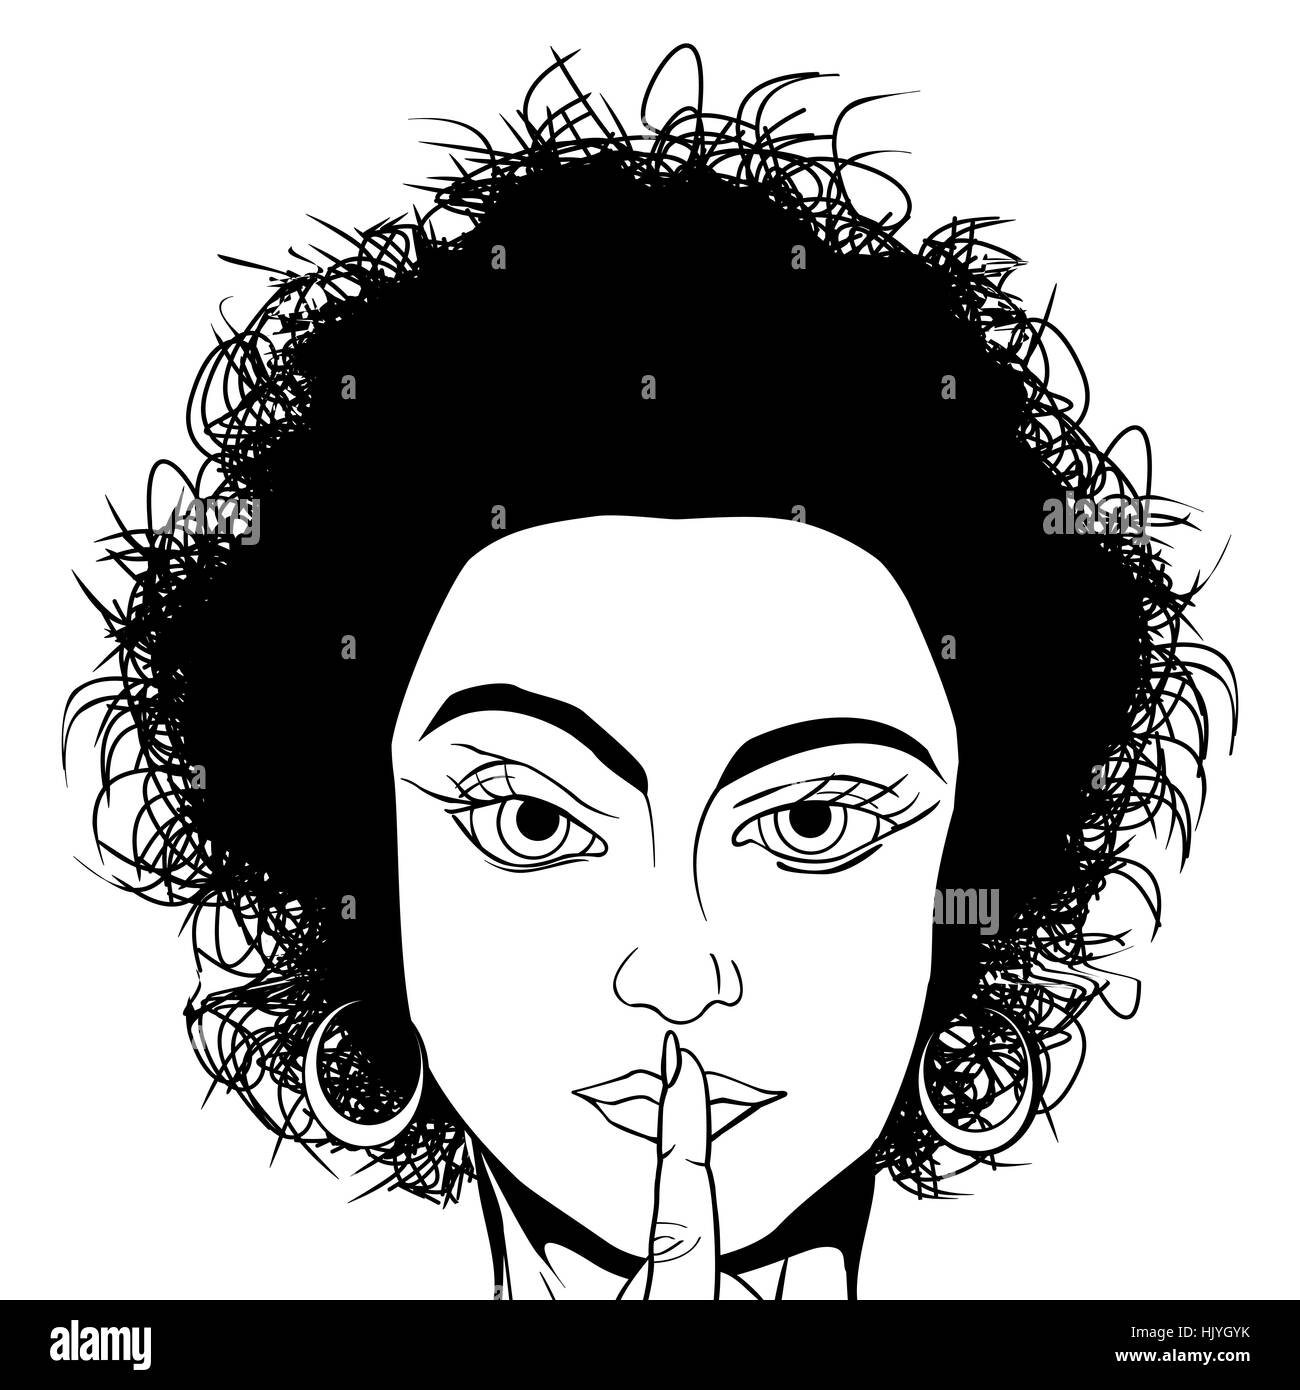 woman, hand, finger, art, isolated, graphic, eye, organ, black, swarthy, Stock Photo